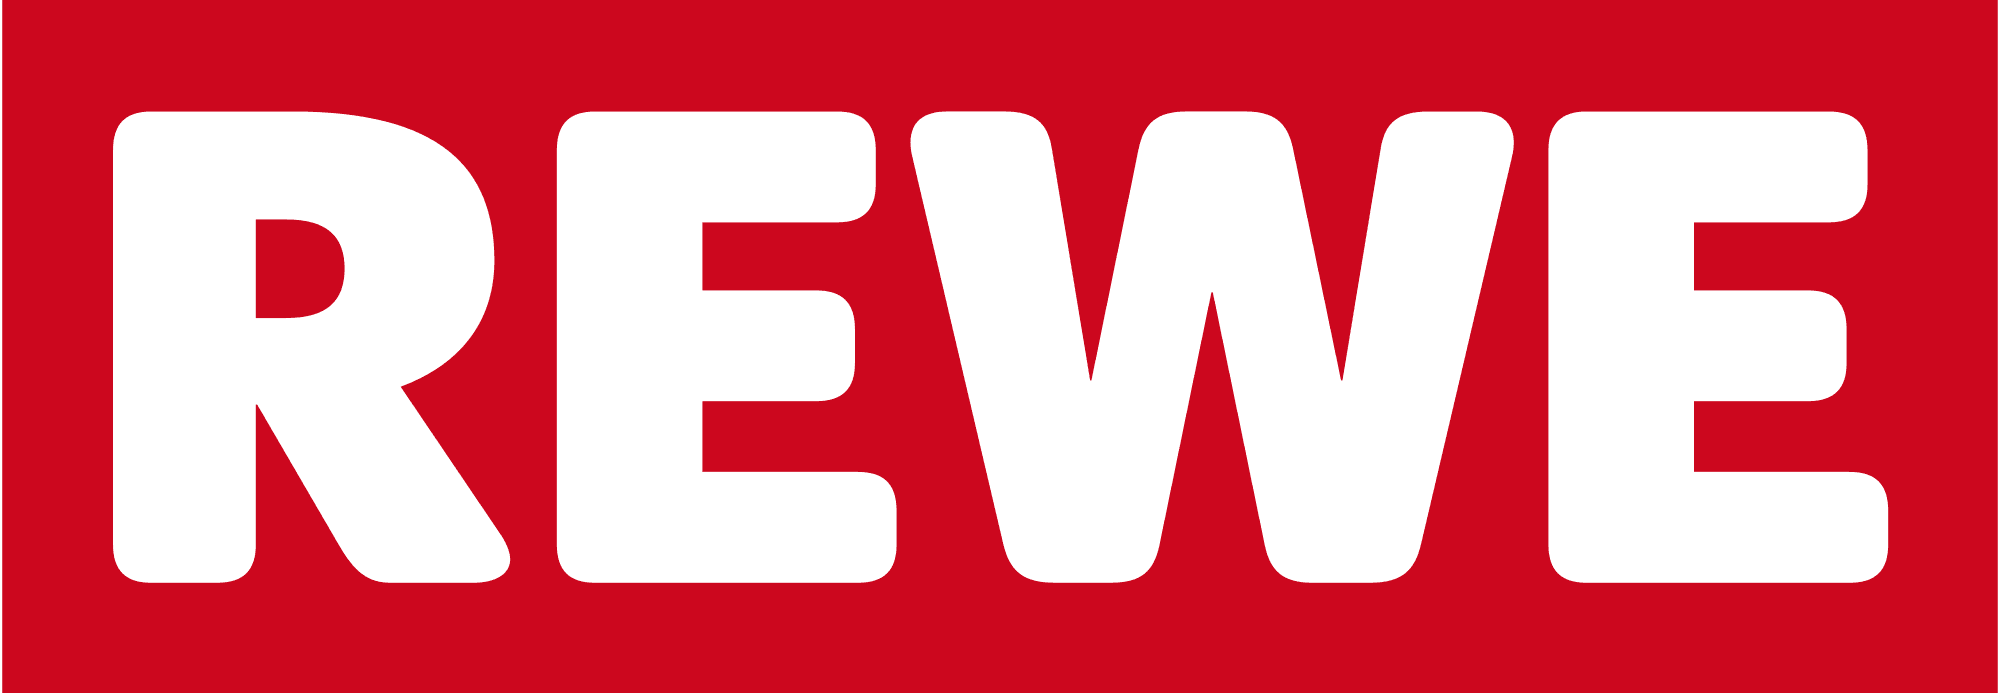 2000px Logo REWE svg